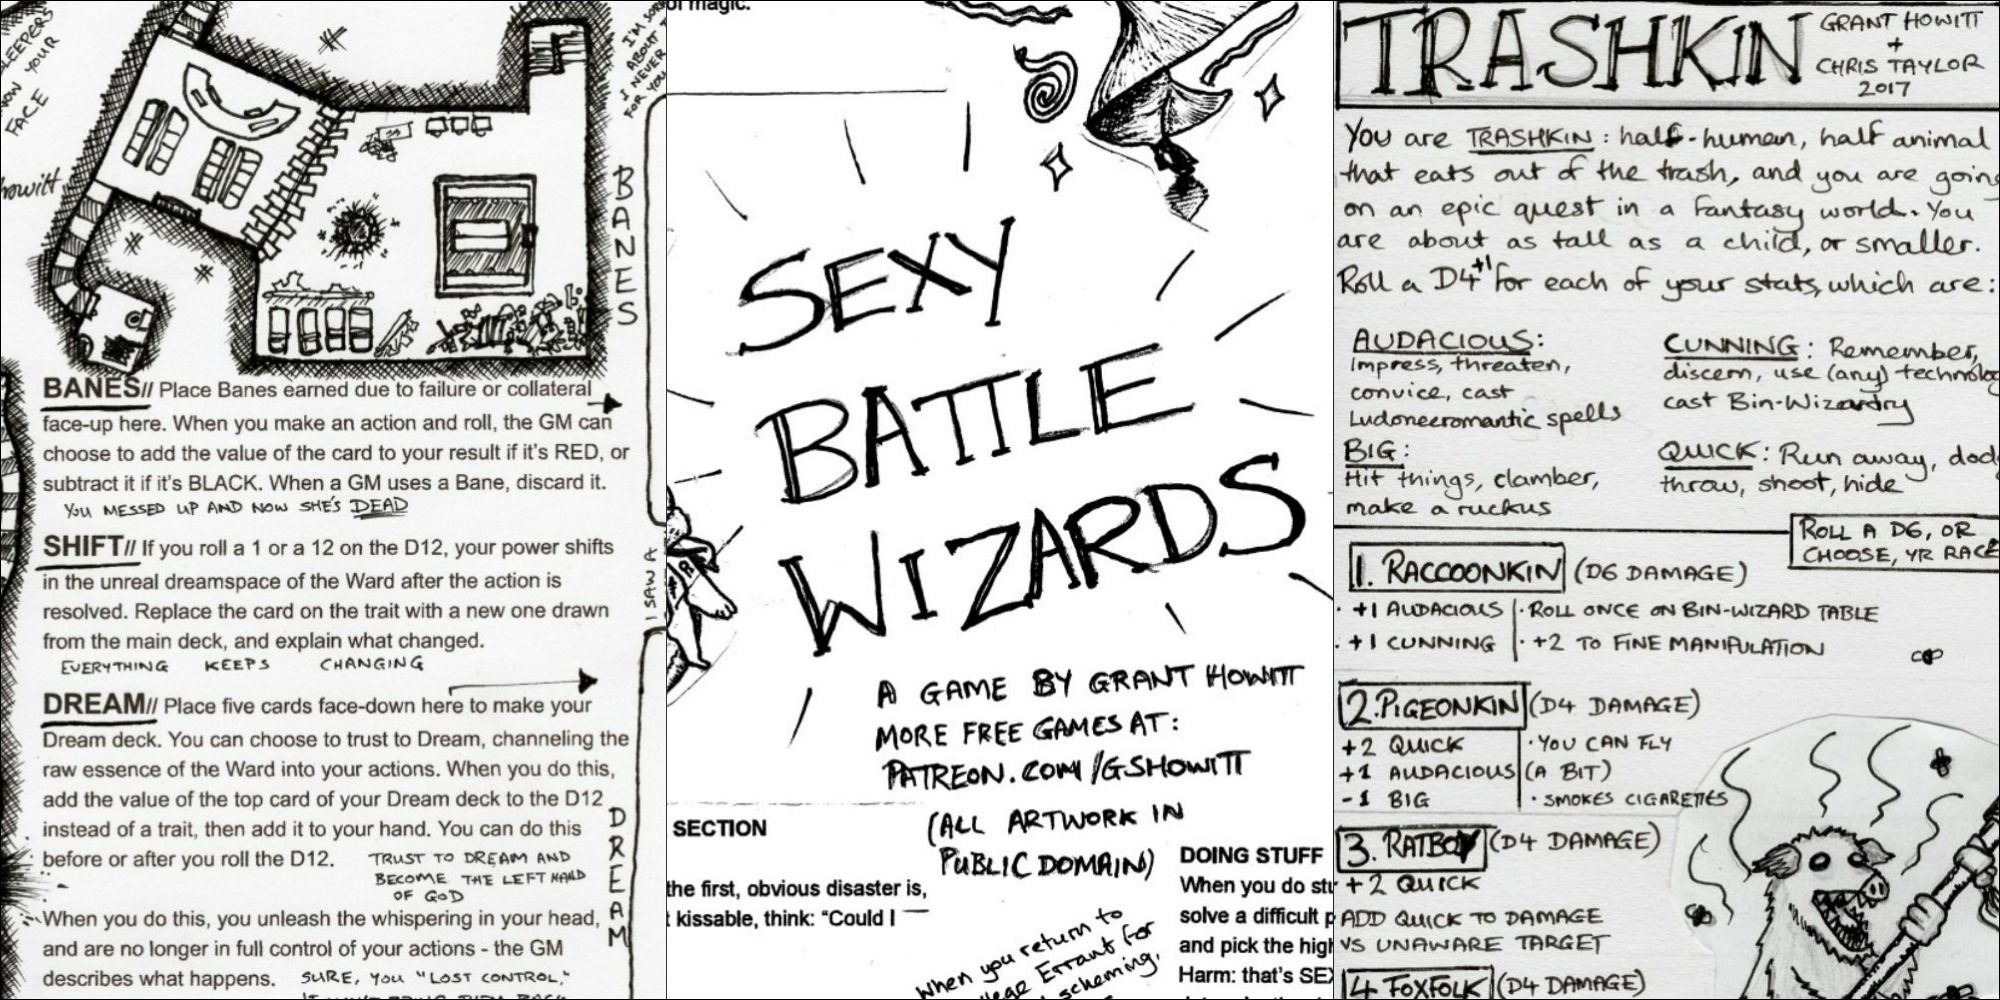 Three One-Page RPGs - Wake, Sexy Battle Wizards, and Trashkin